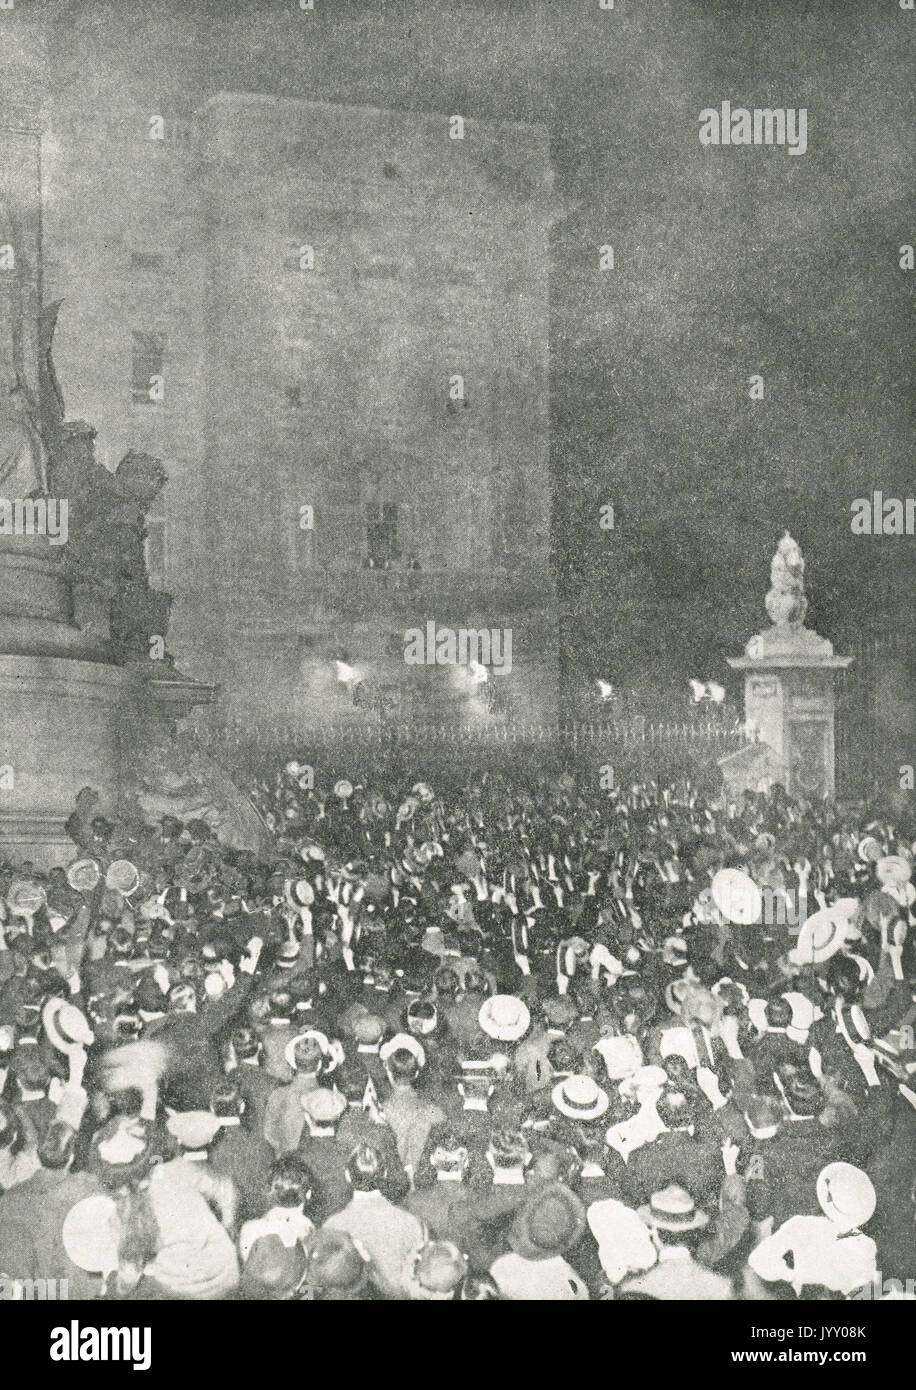 Ccrowd awaiting declaration of war outside Buckingham palace, 4 Aug 1914 Stock Photo